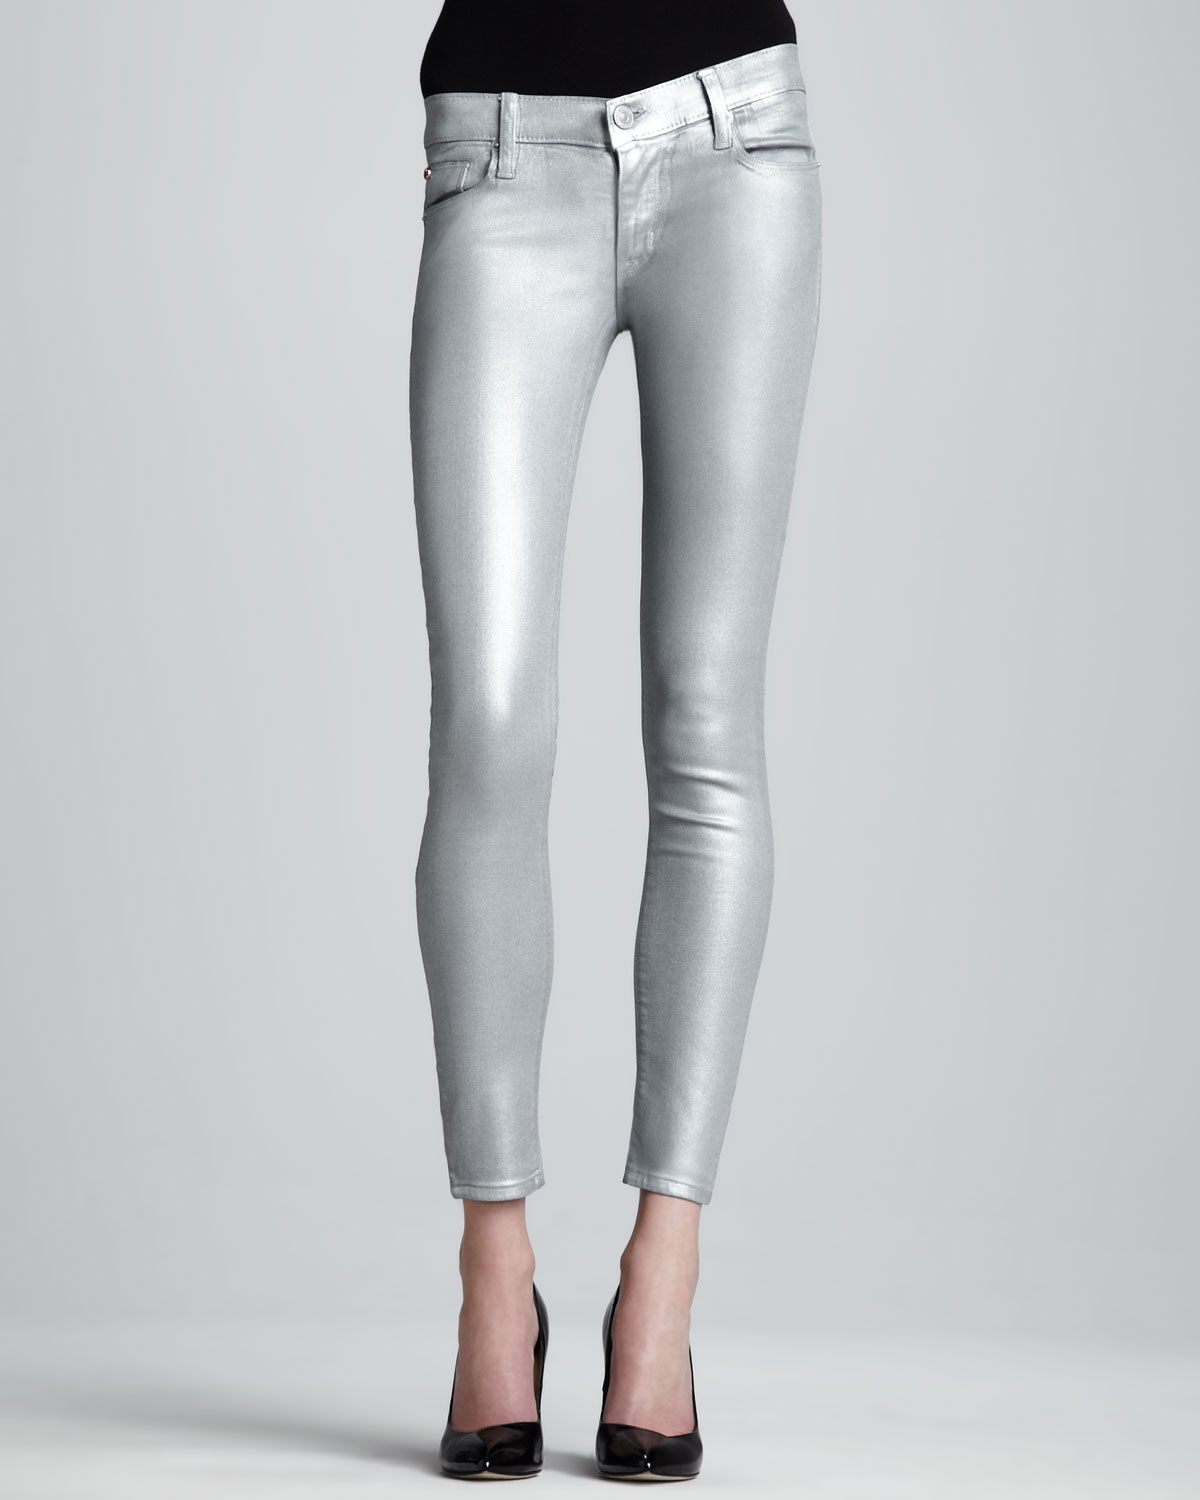 Hudson Jeans Krista Silver Super Skinny Jeans in Metallic - Lyst